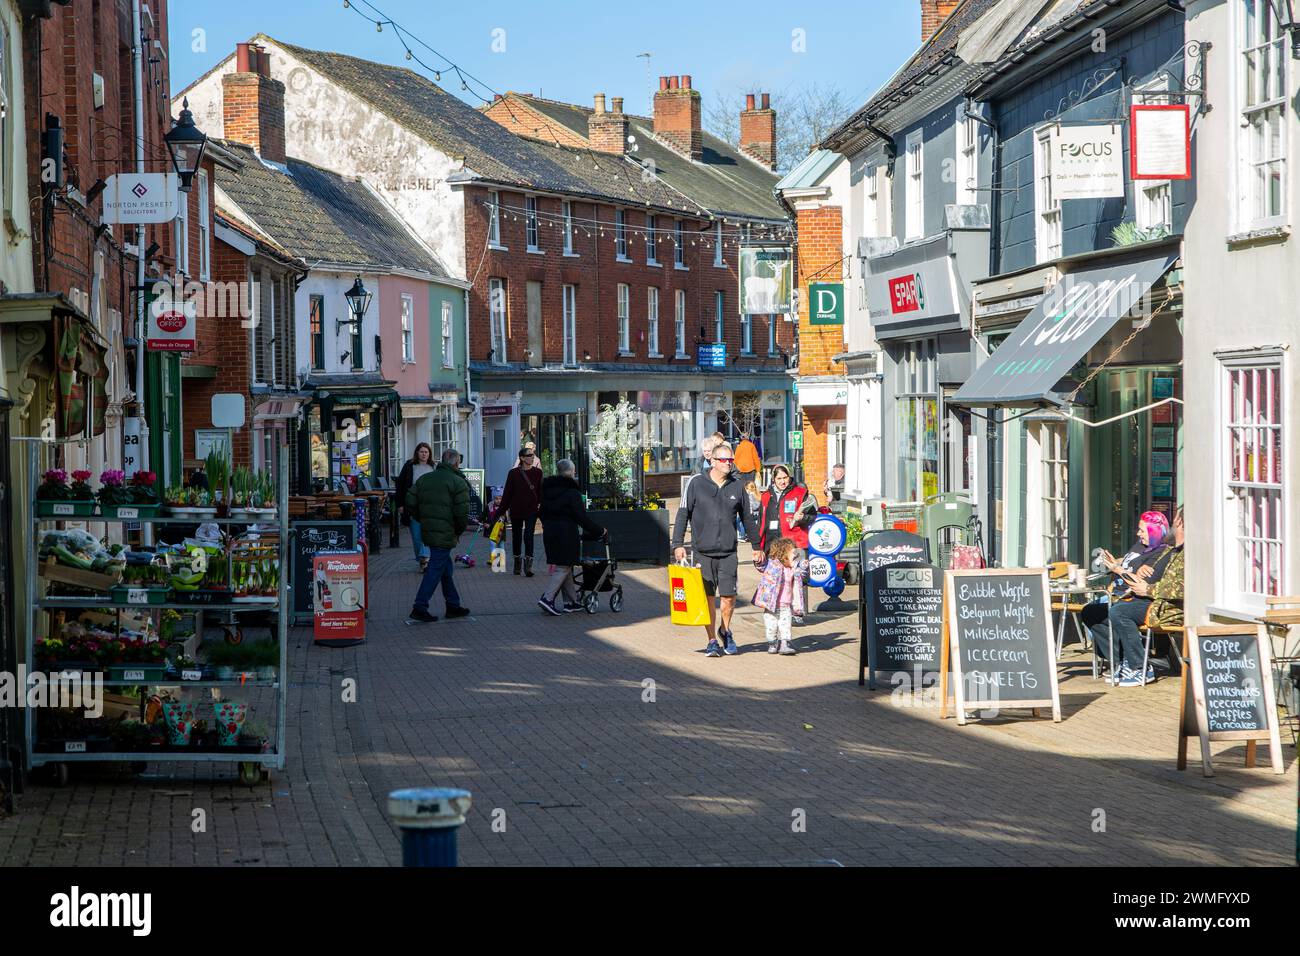 Pedestrianised high street in town centre, Halesworth, Suffolk, England, UK Stock Photo